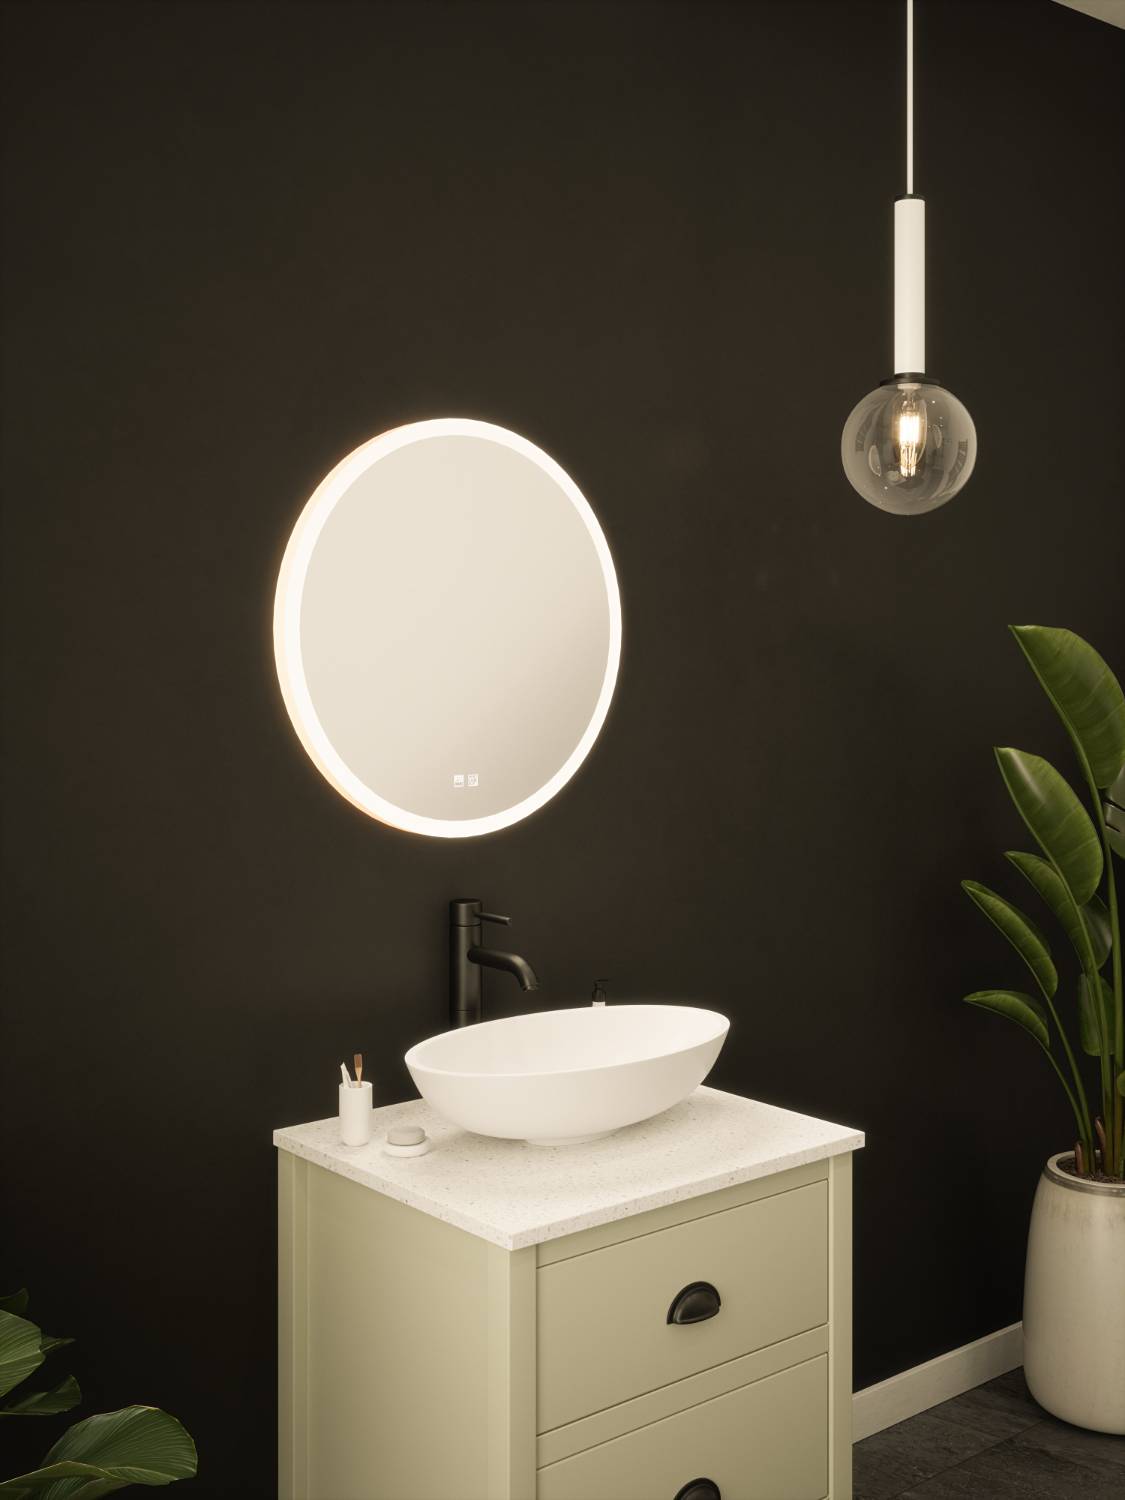 Mirror - Sudbury Illuminated CCT LED Mirror - SY9009 - LED Mirror with Lighting